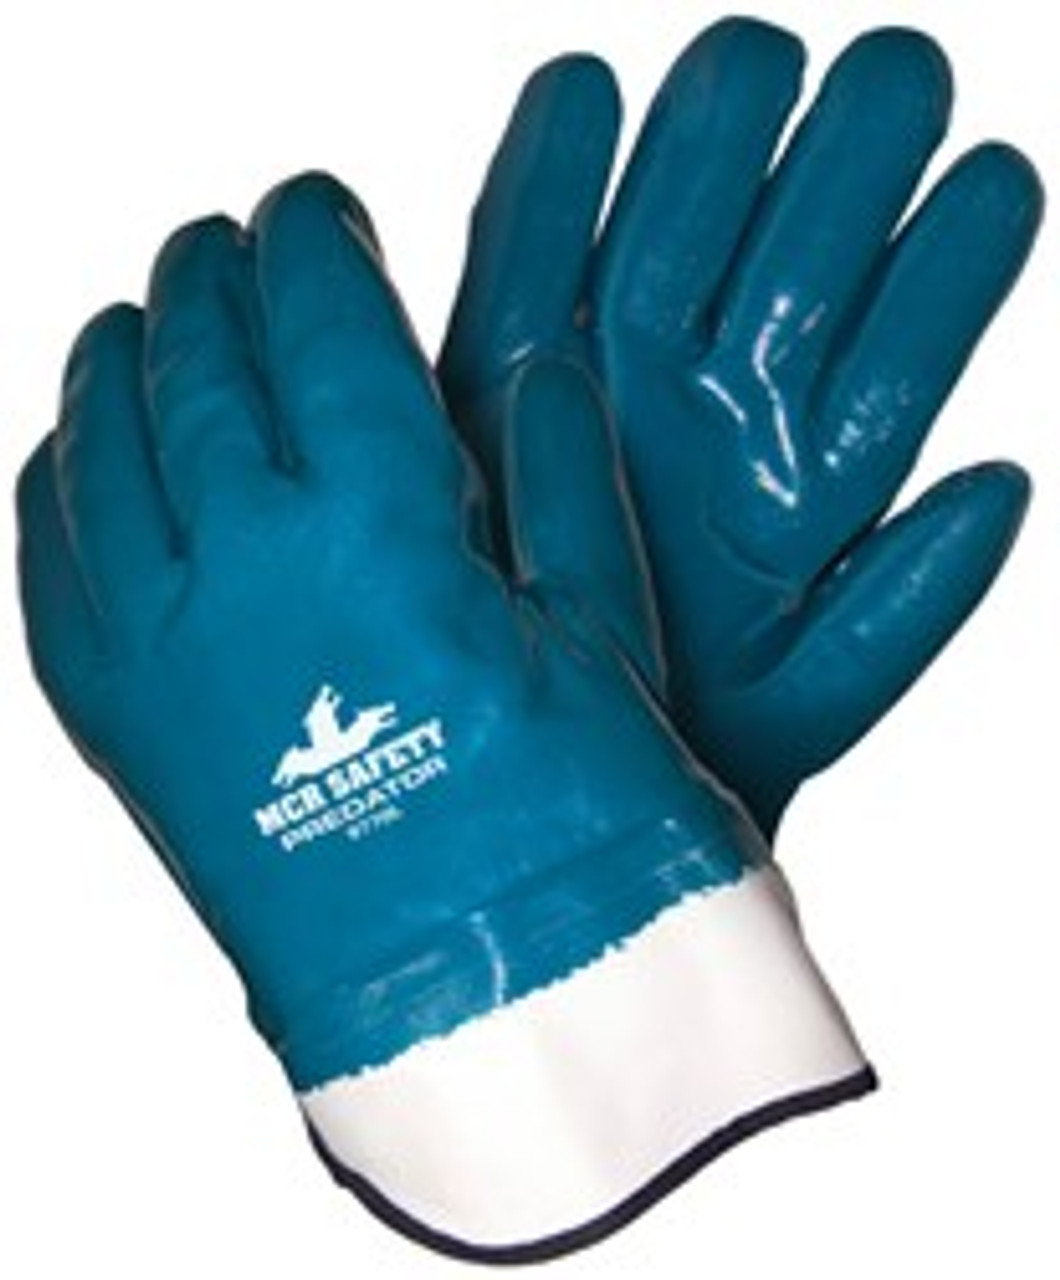 Medium TruForce Gray Polyurethane Coated Work Gloves - Industrial